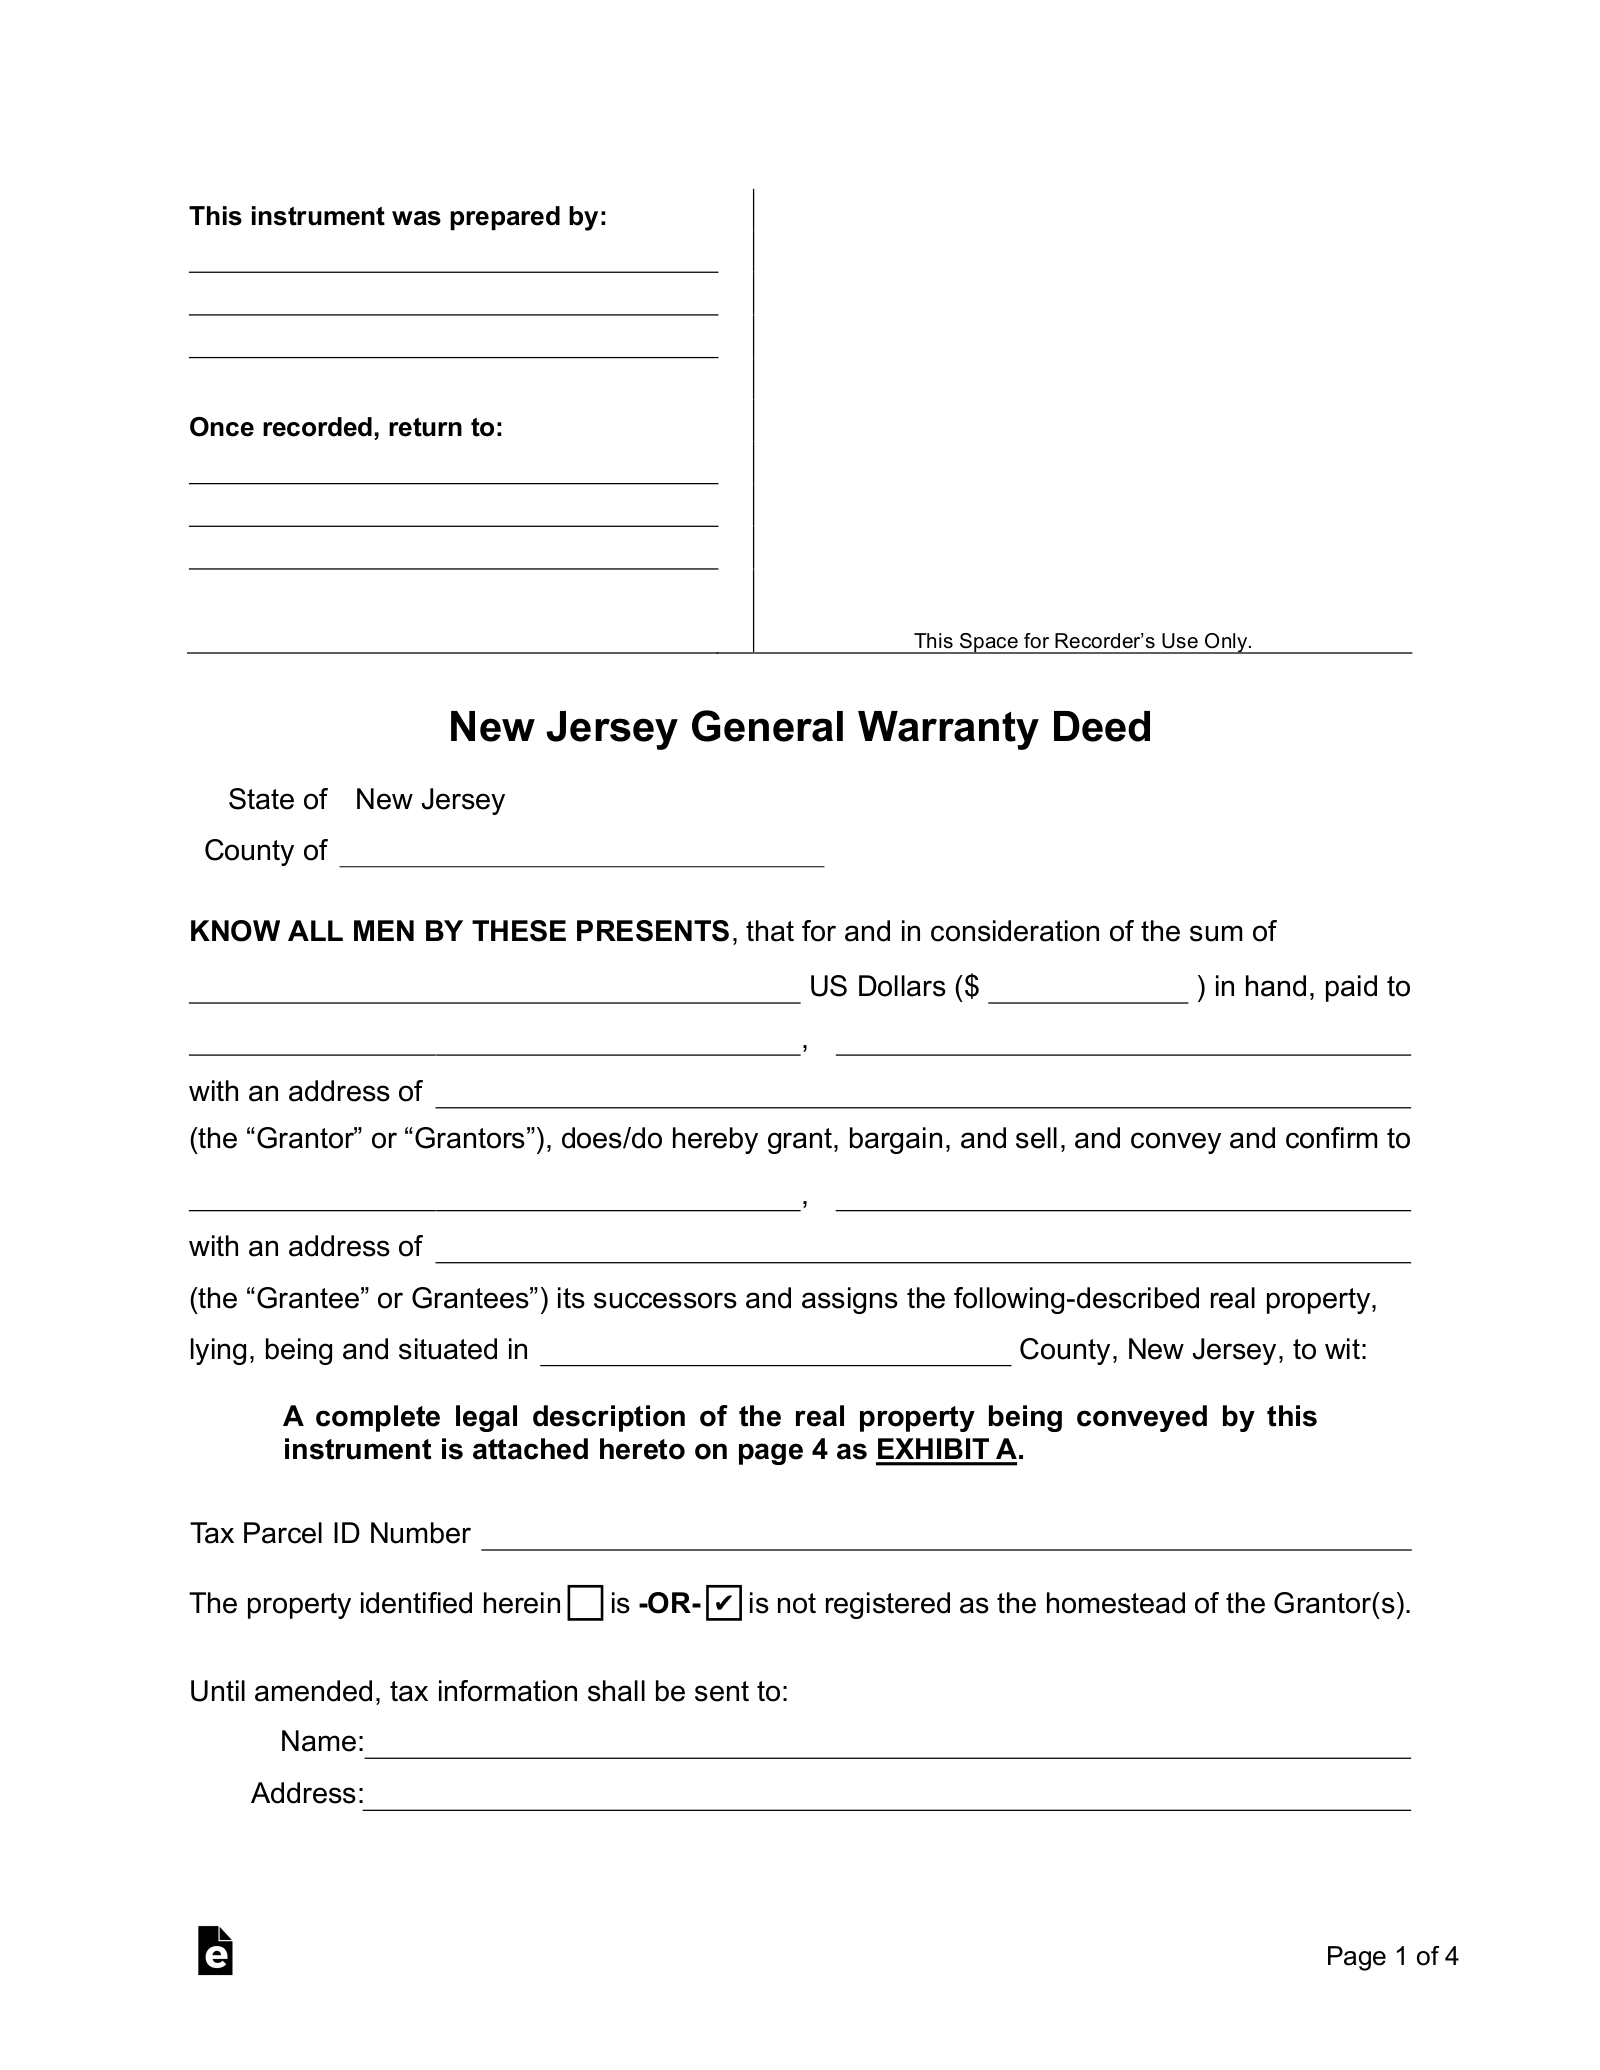 free-new-jersey-general-warranty-deed-form-pdf-word-eforms